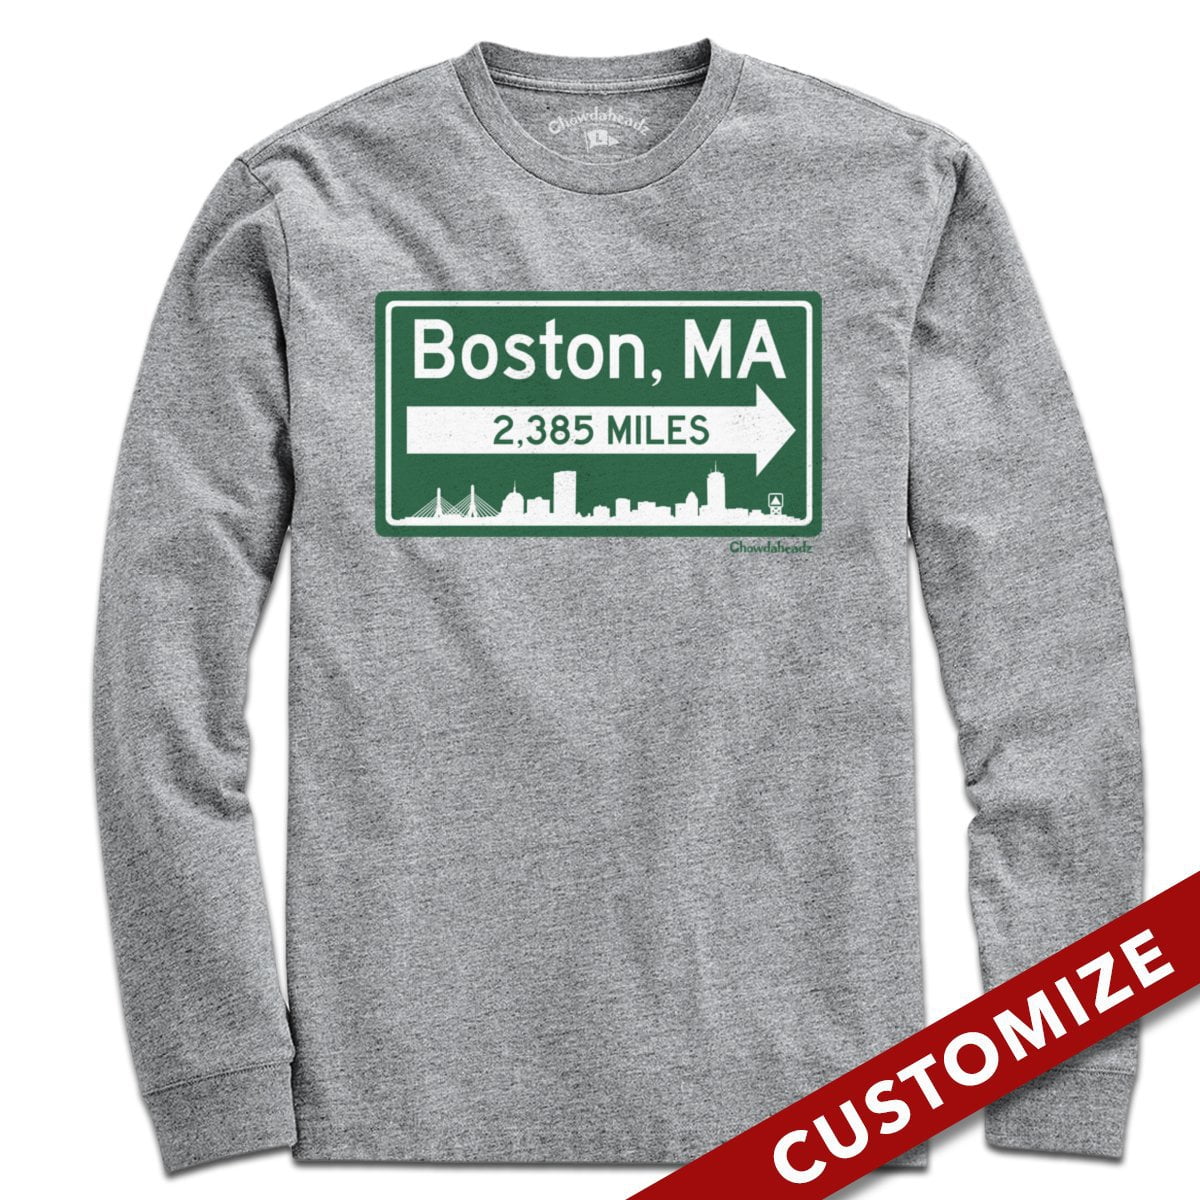 Custom Miles to Boston Sign T-Shirt - Chowdaheadz